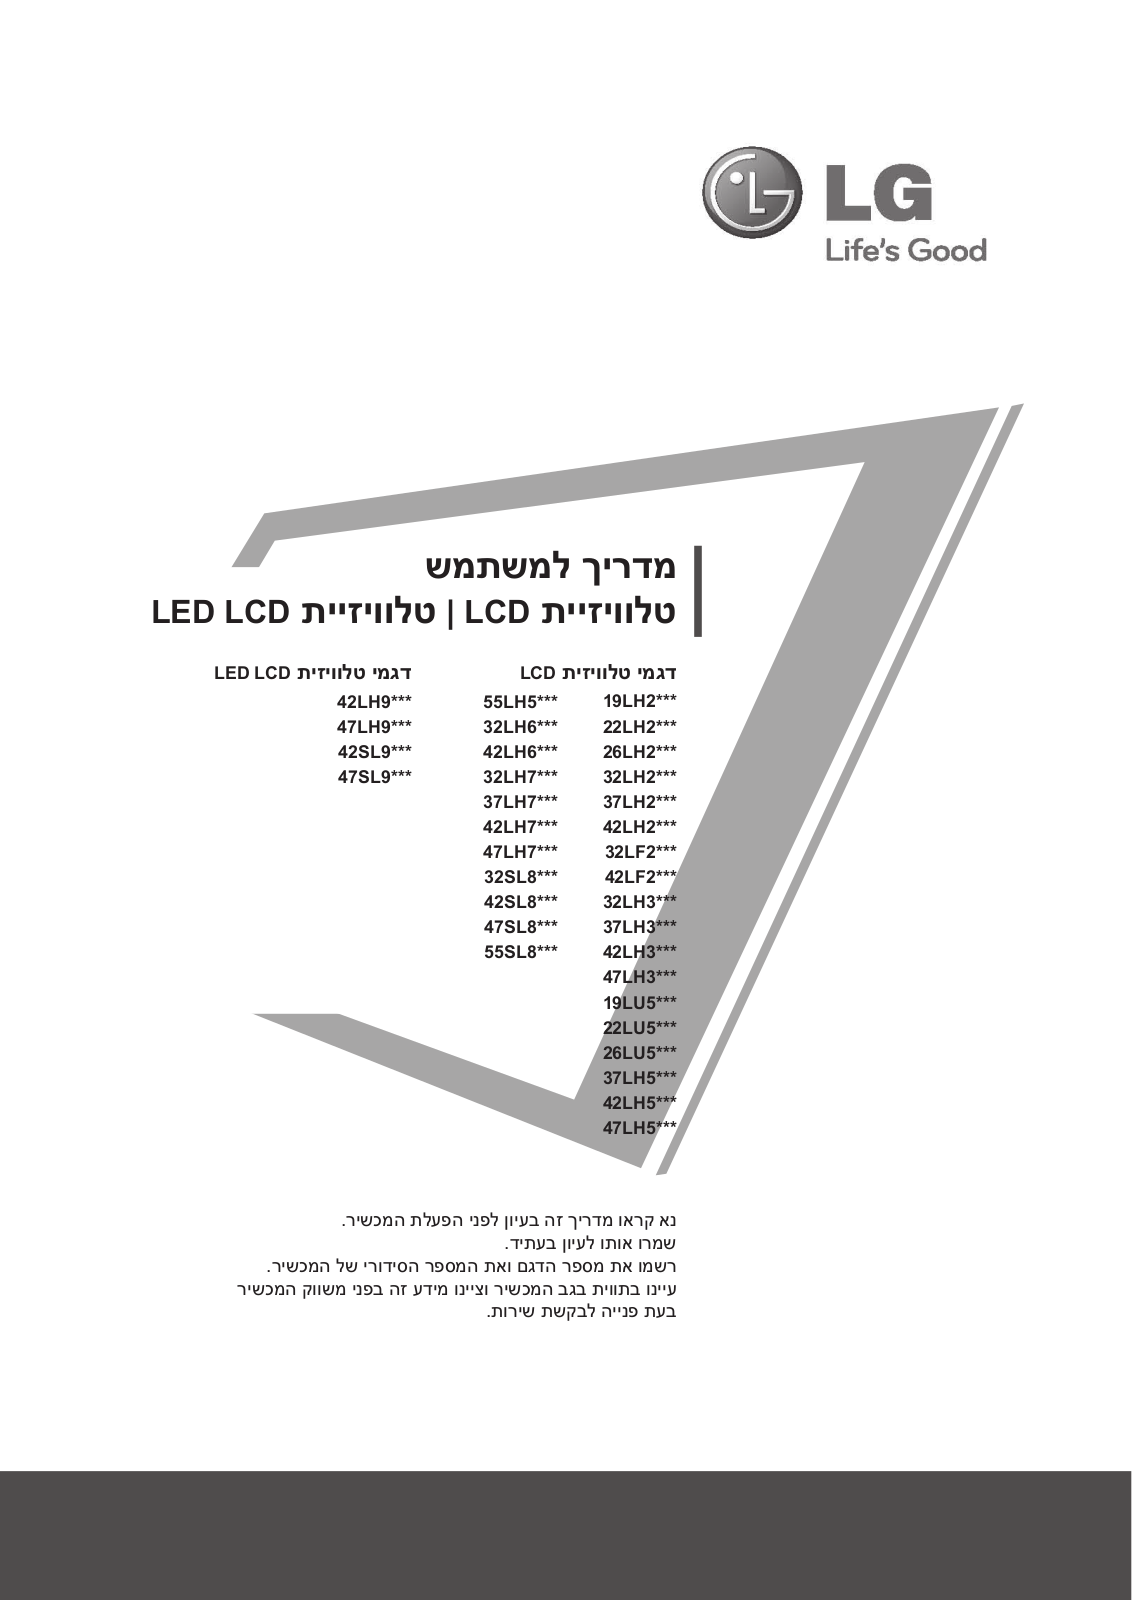 Lg 37LH7000, 32LF2000, 22LU5000, 55LH5000, 32LH7000 Manual